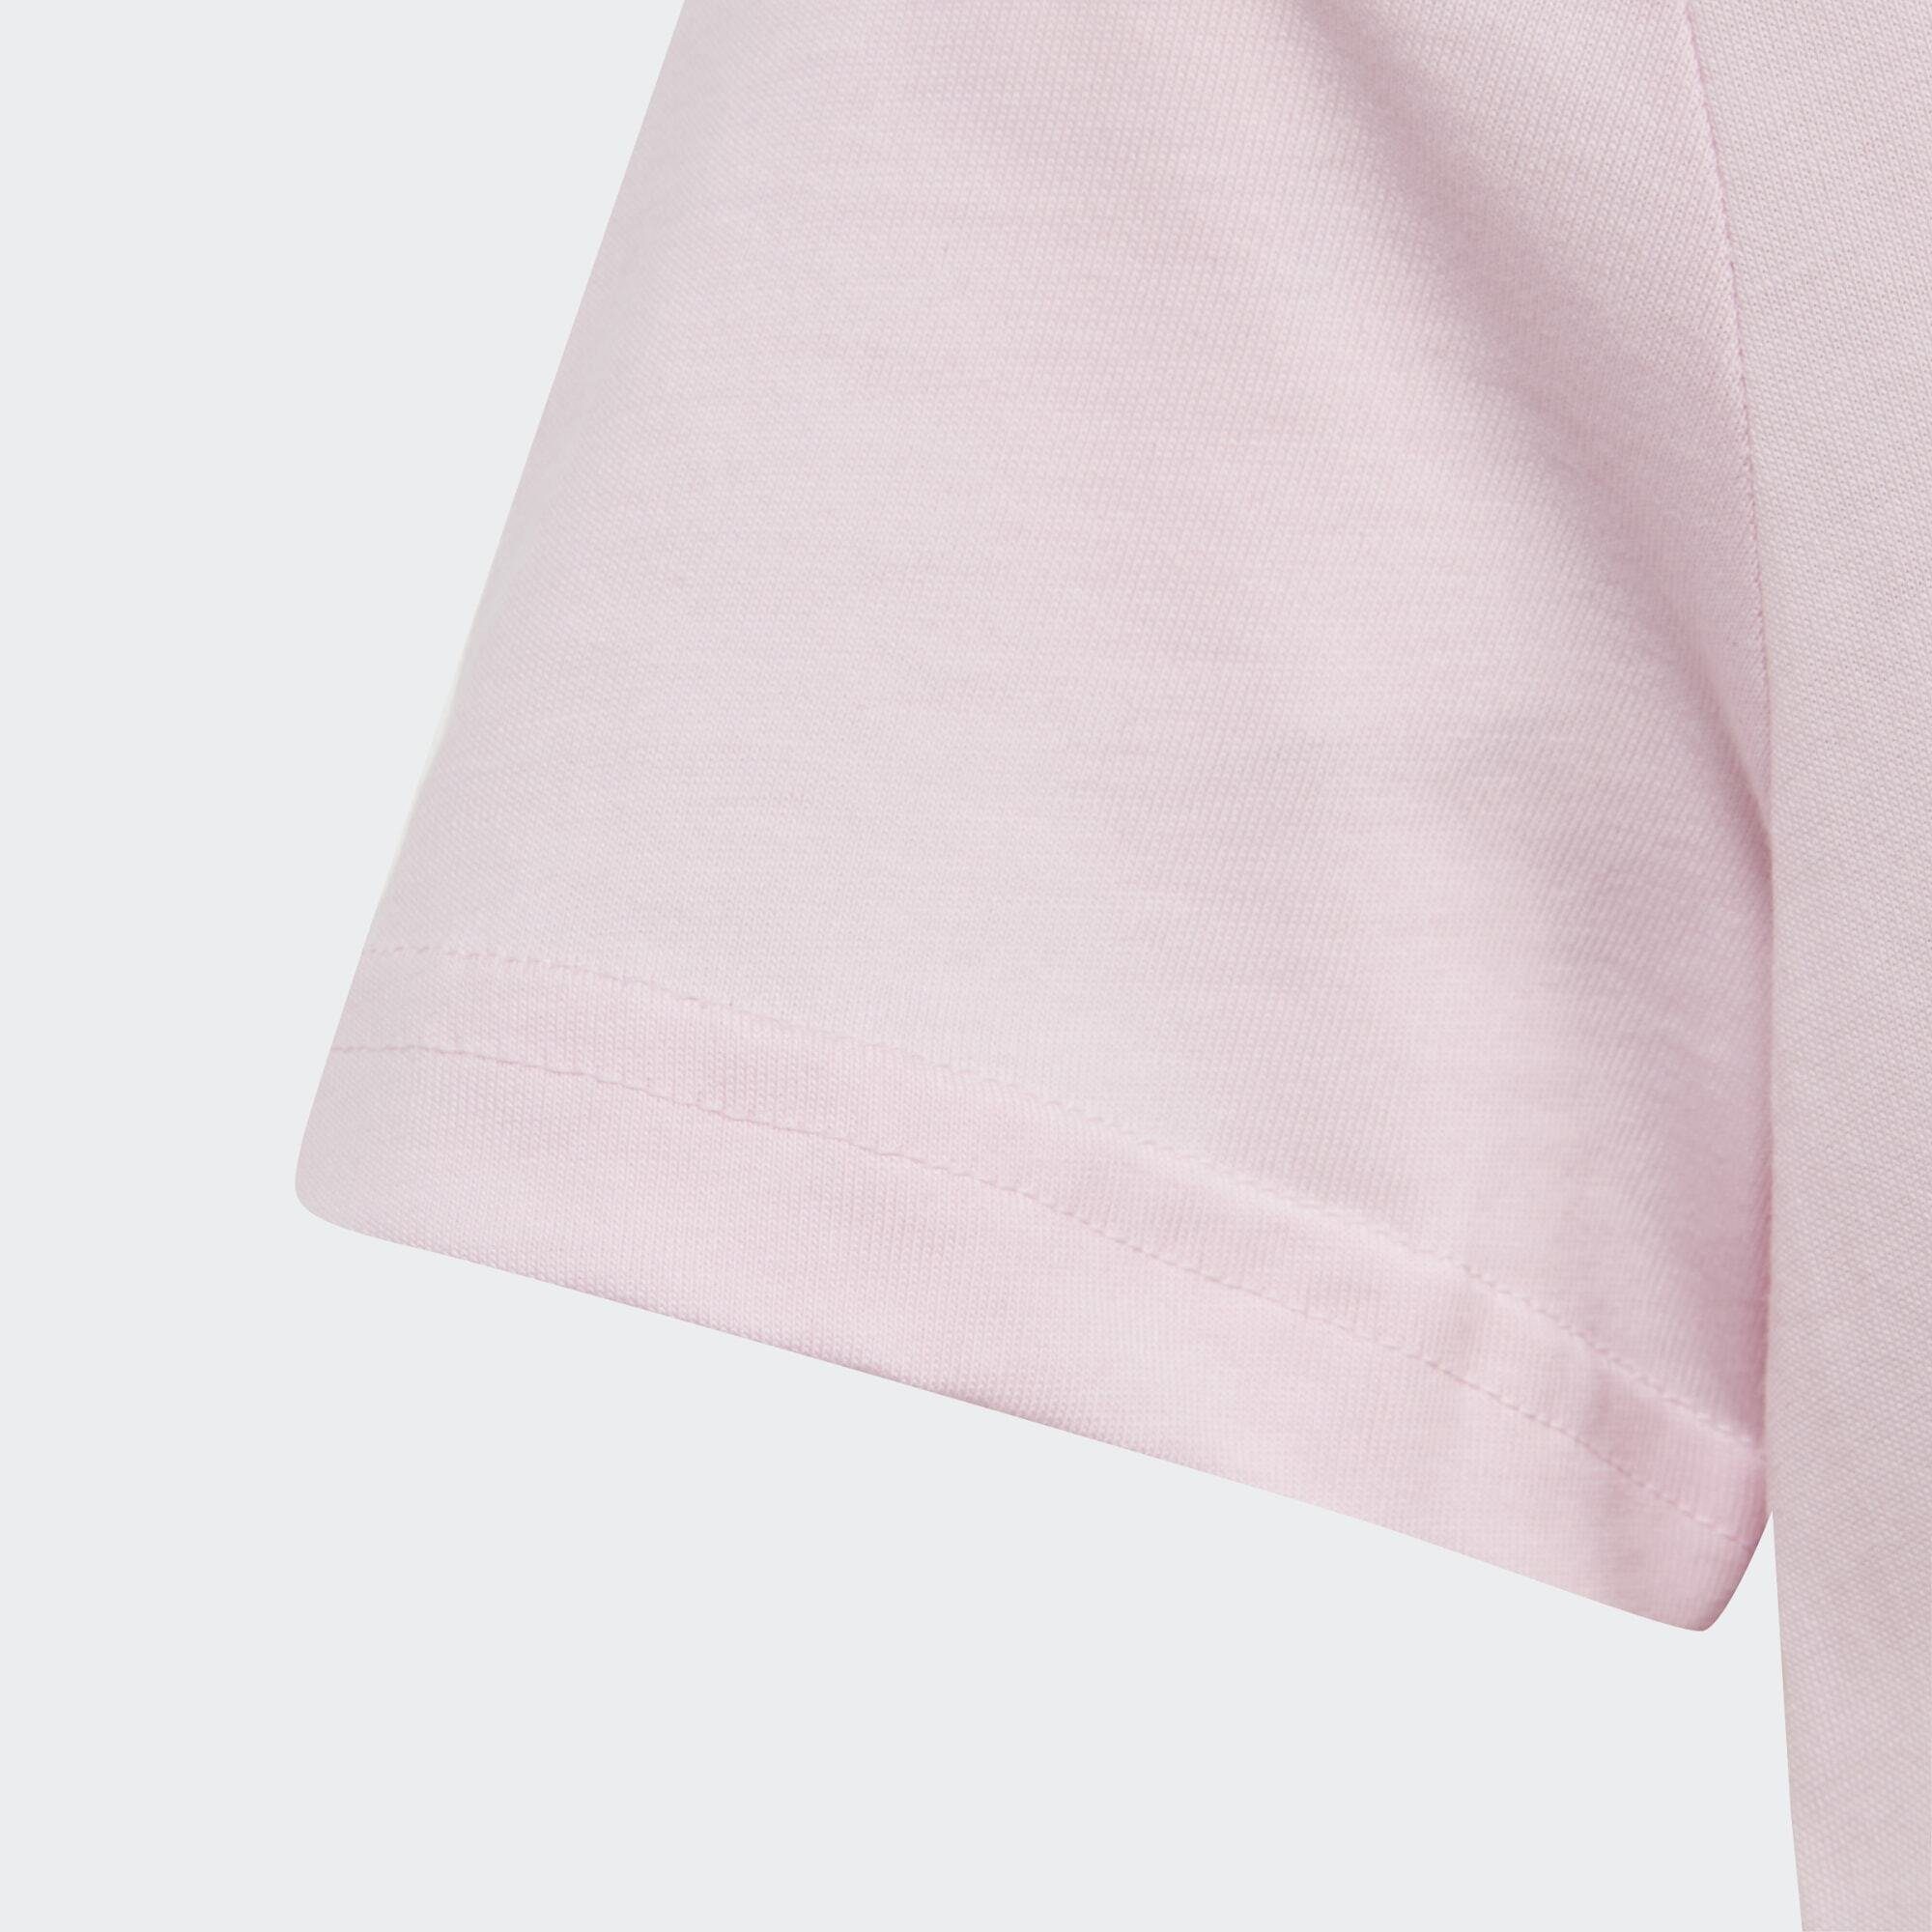 adidas Sportswear T-Shirt LINEAR Pink White T-SHIRT Clear SLIM LOGO / COTTON ESSENTIALS FIT